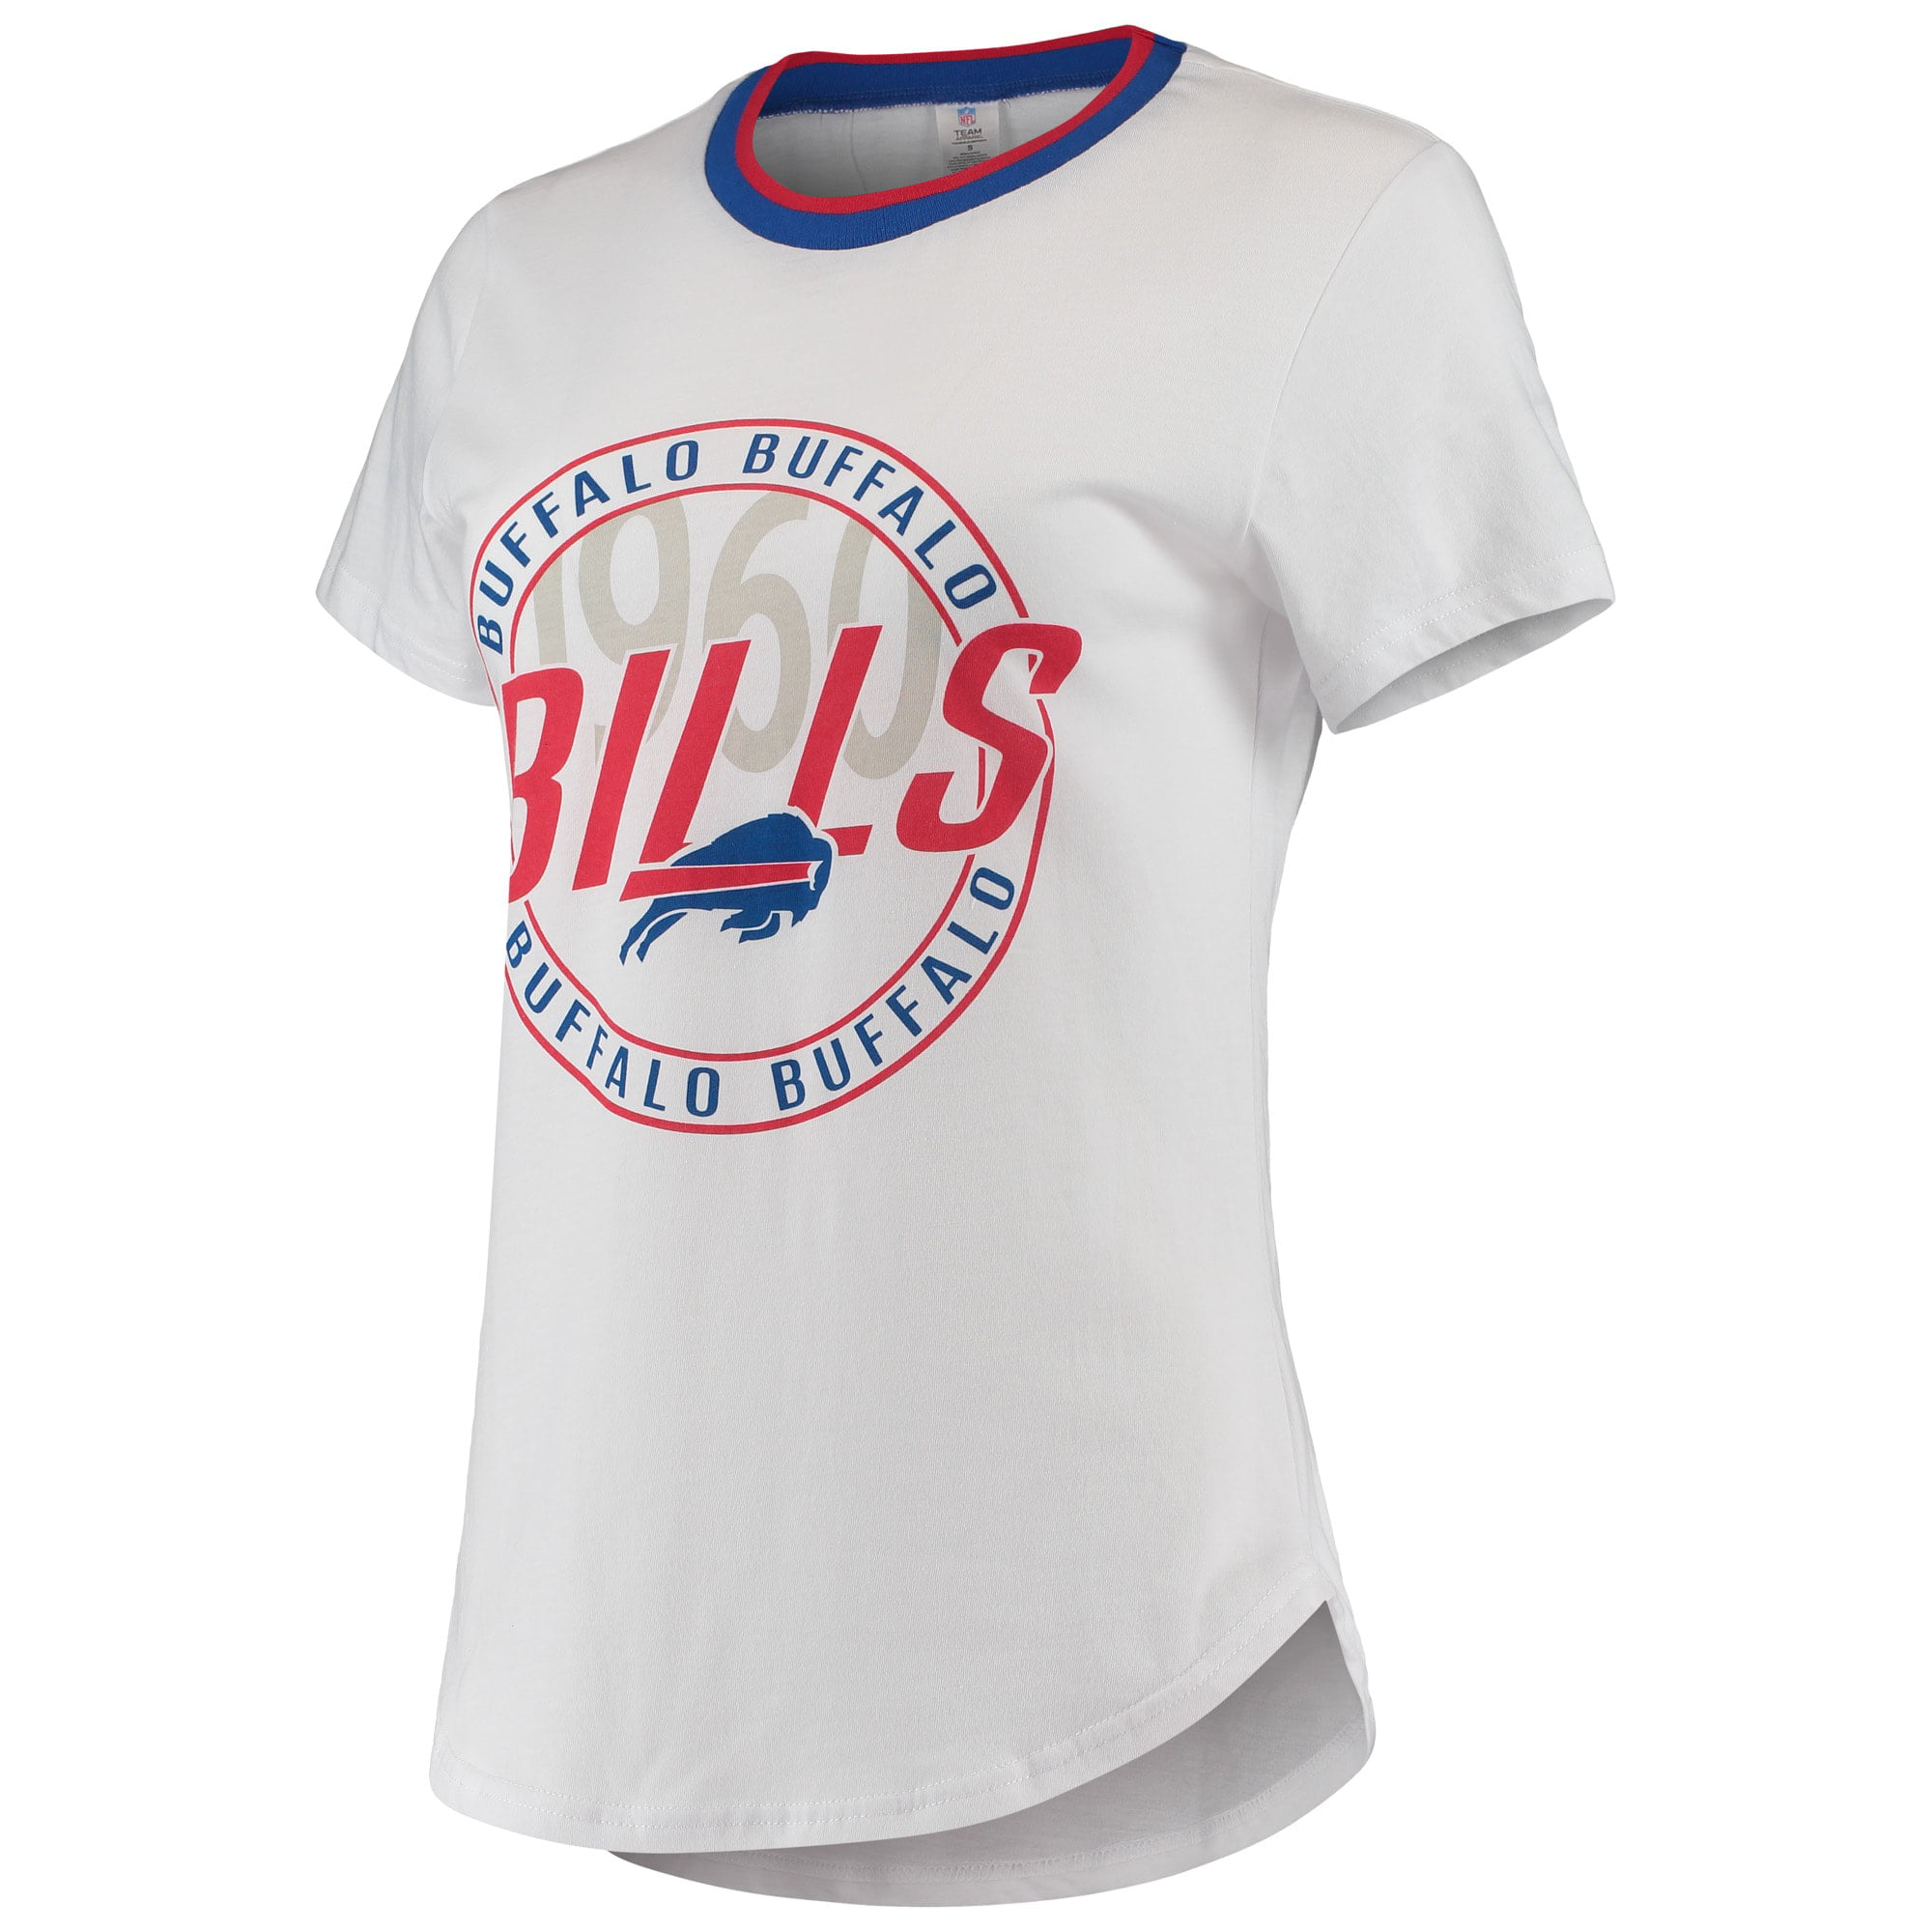 nfl buffalo bills women's apparel